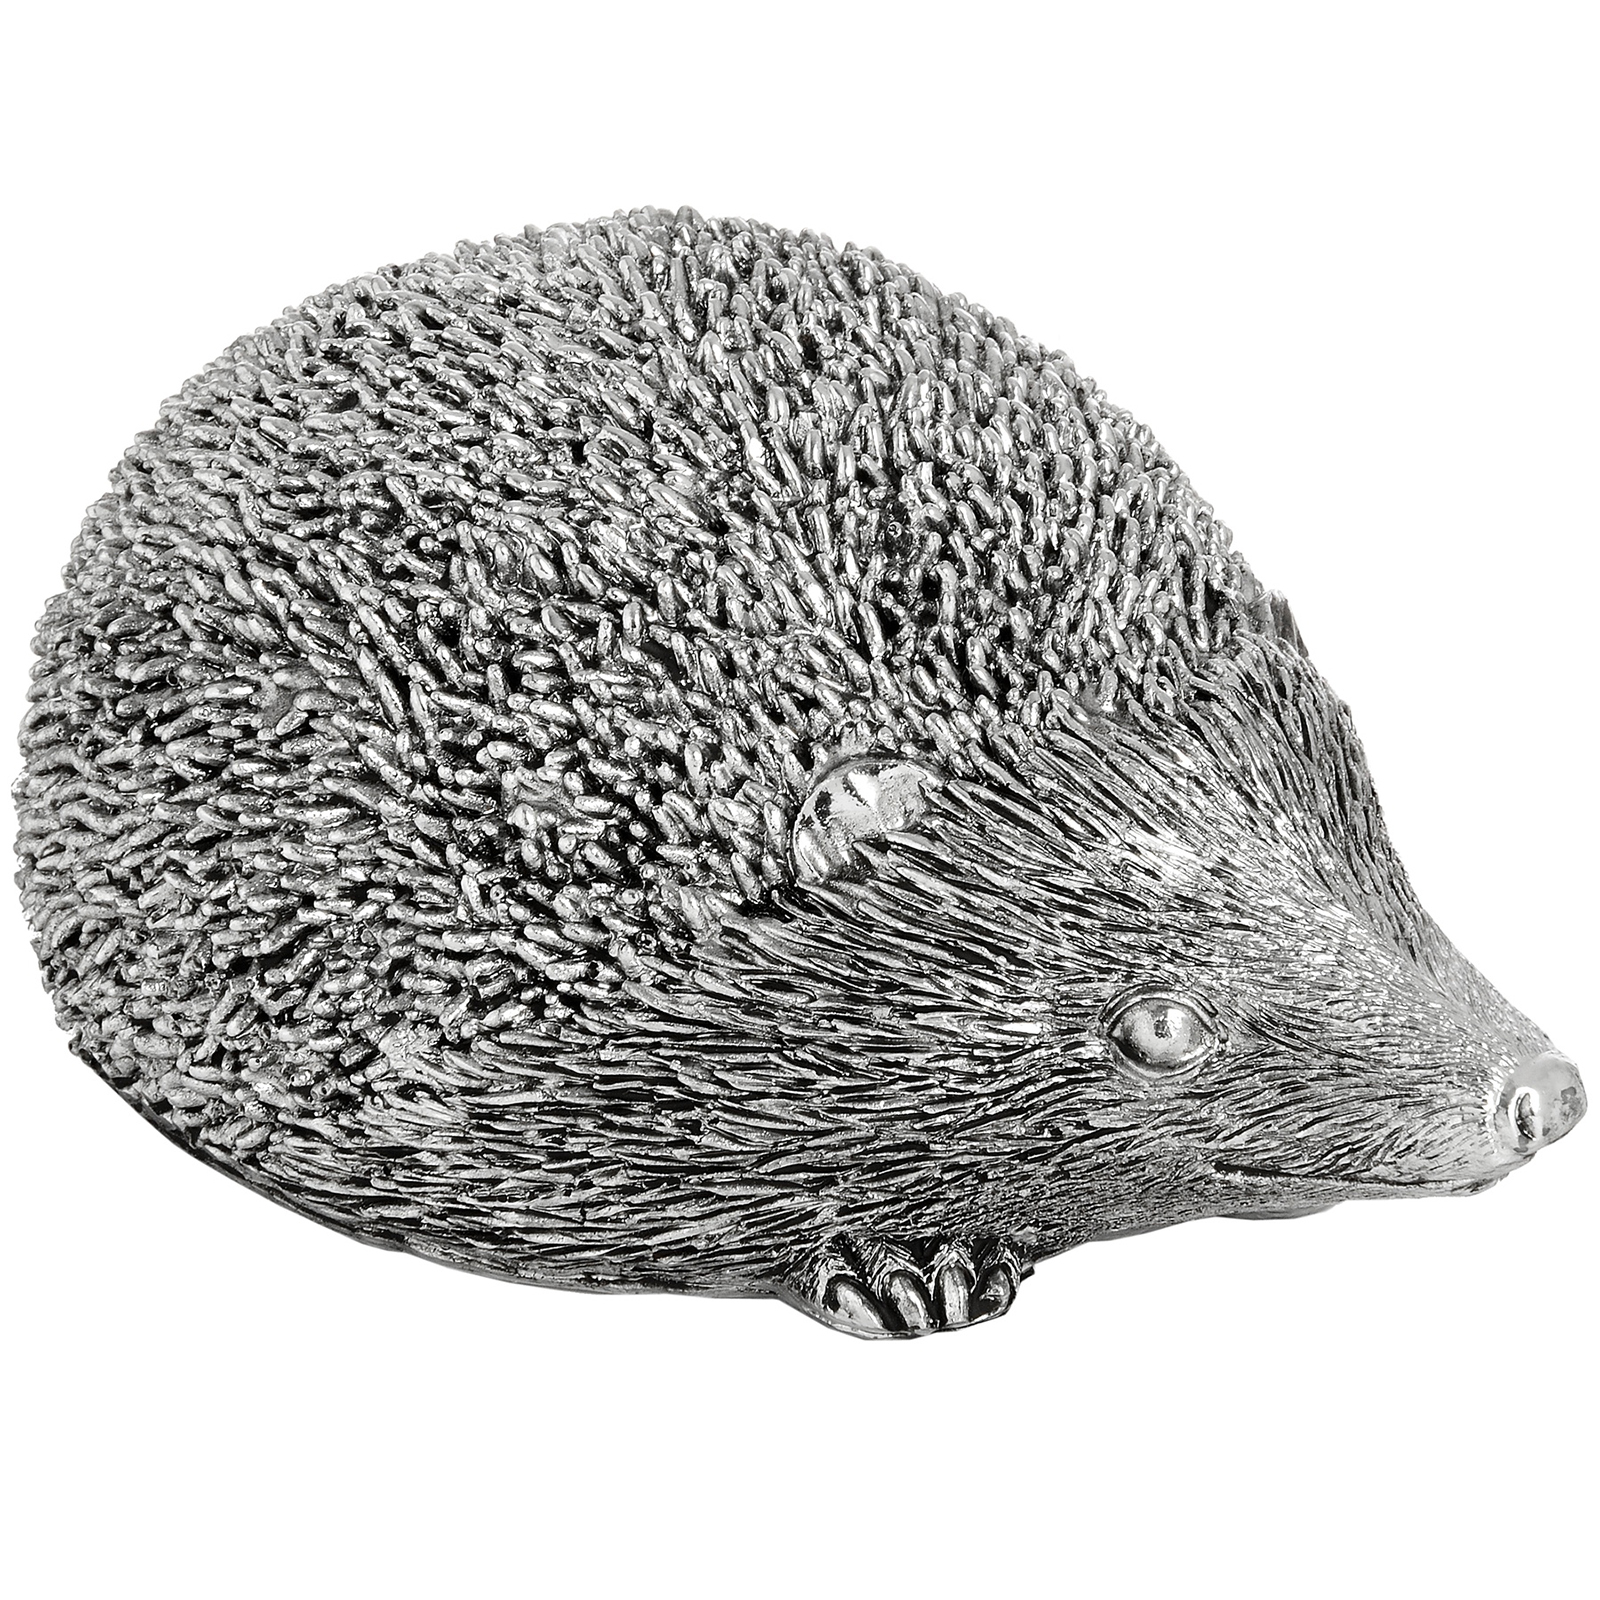 Small Silver Hedgehog